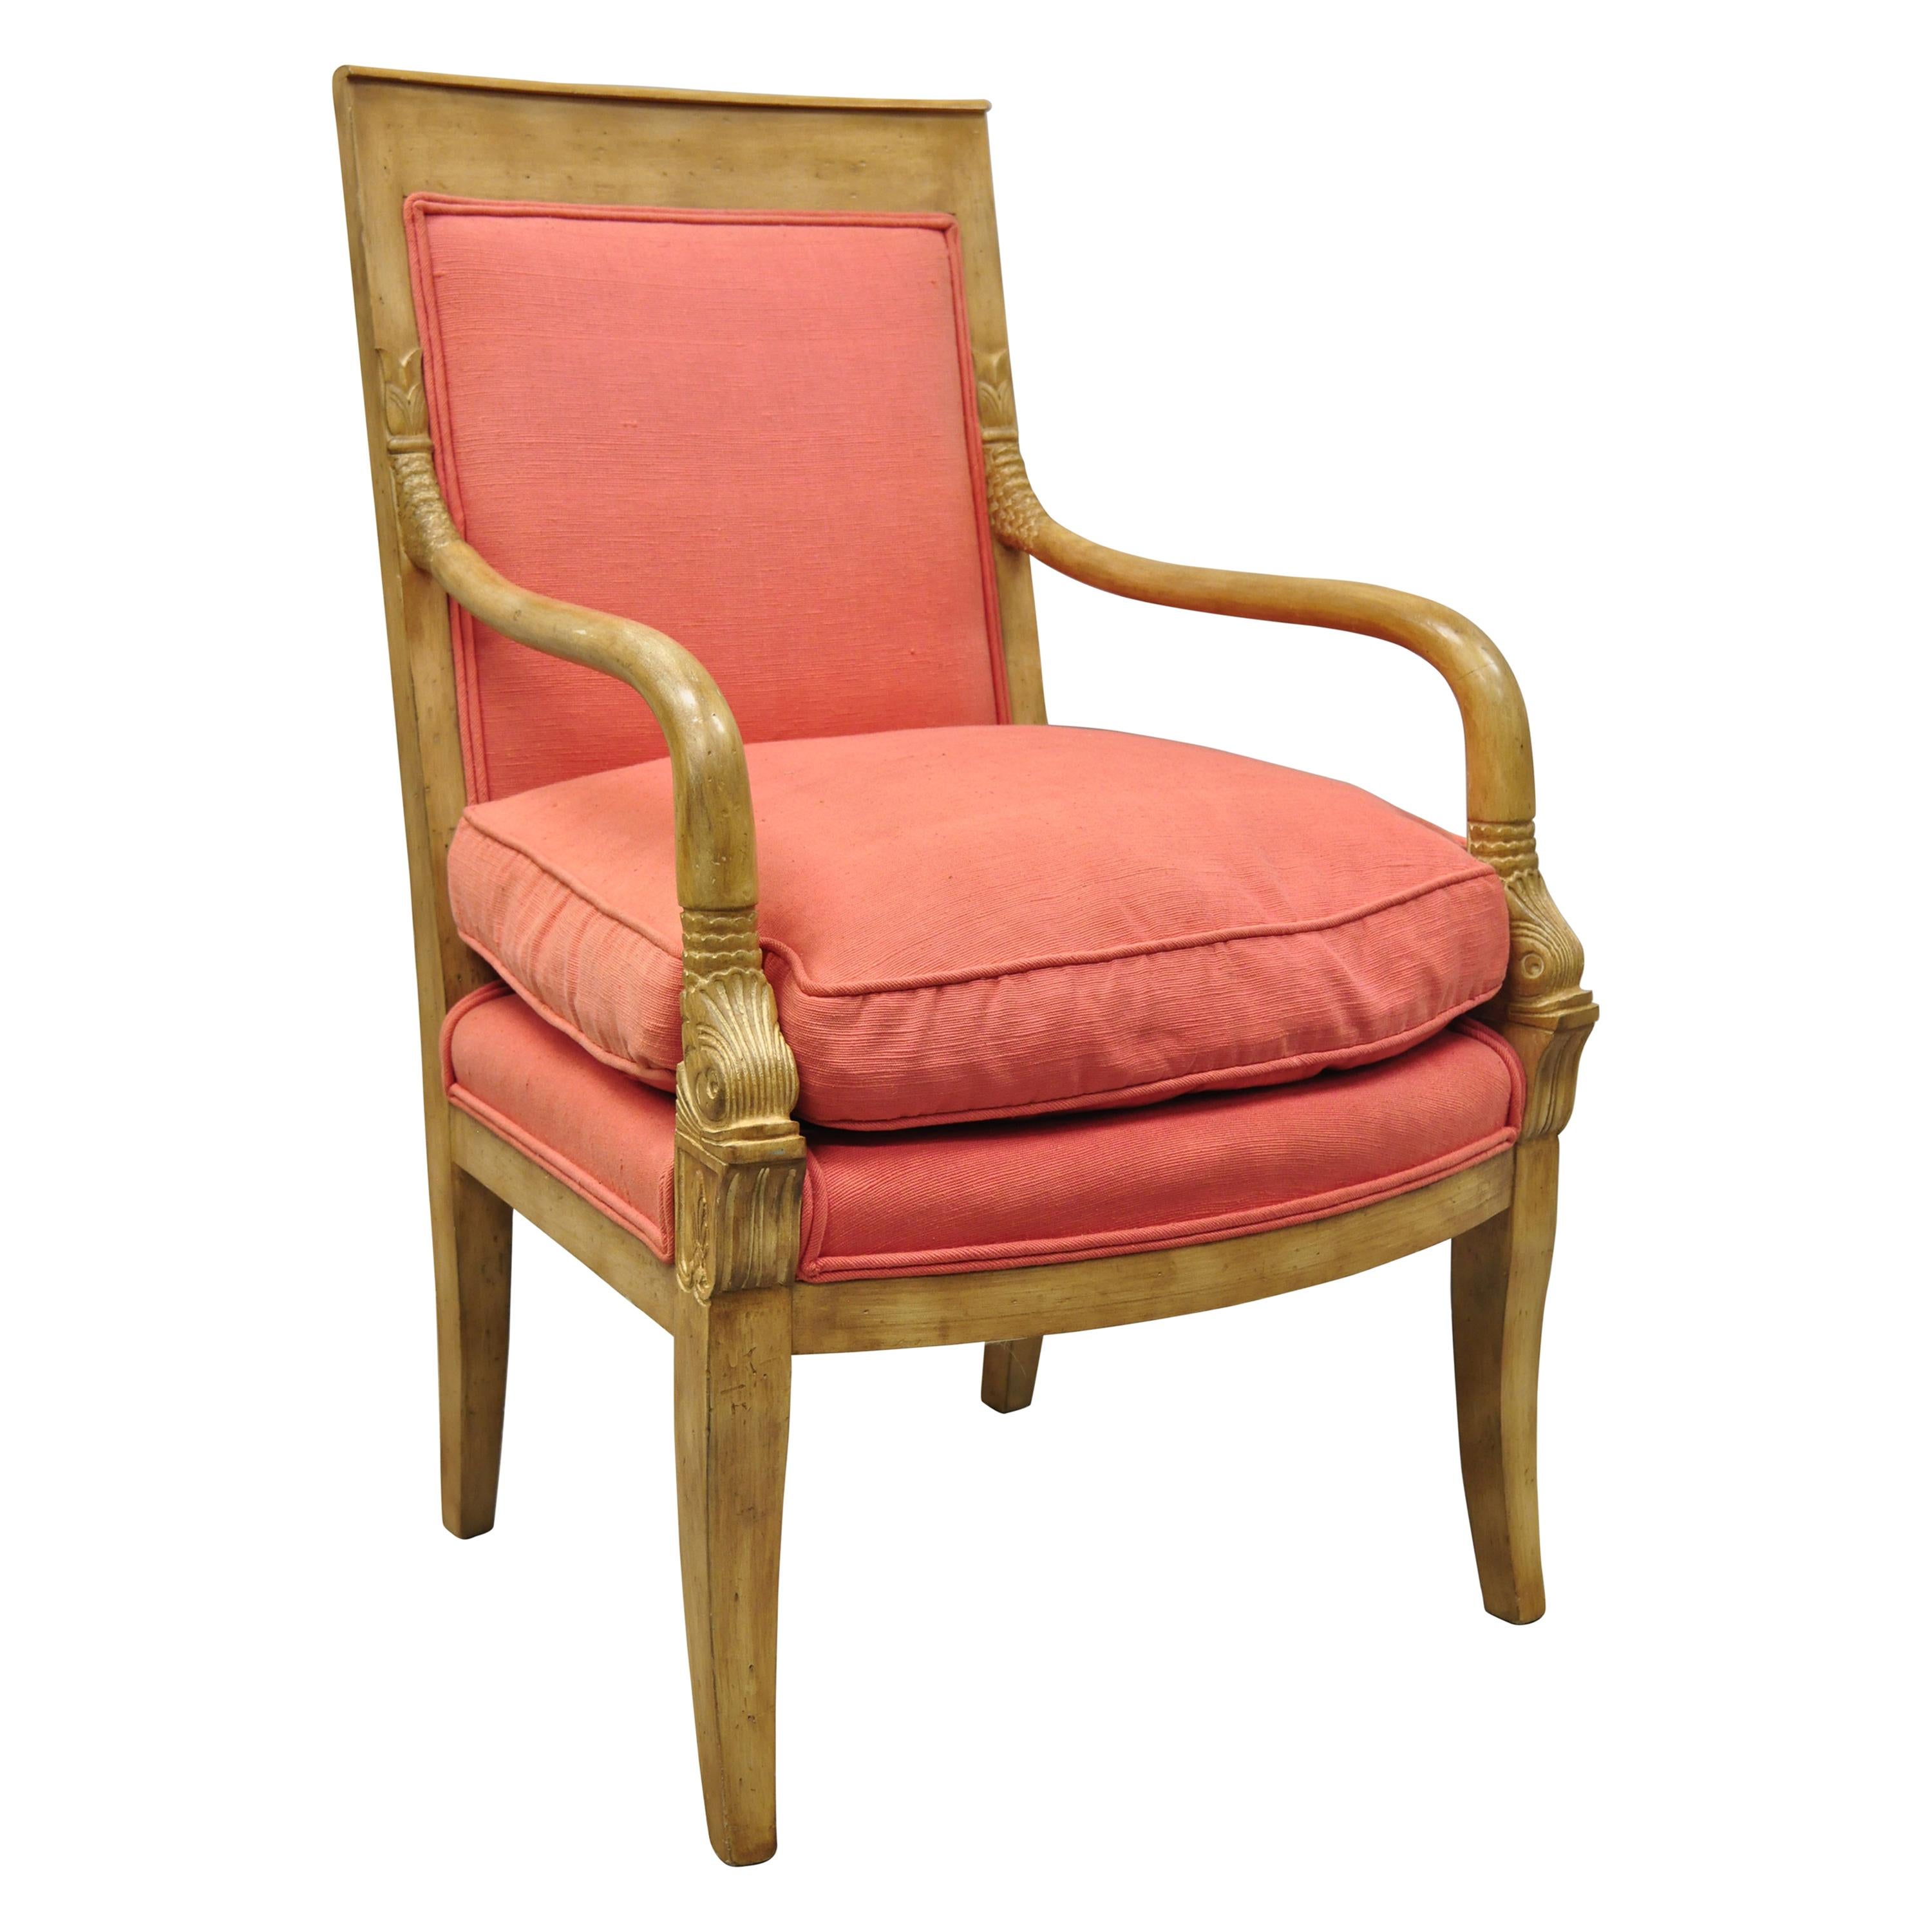 Italienischer Regency-Sessel aus der Bloomingdale Trianon Kollektion, Delphin geschnitzt, Vintage